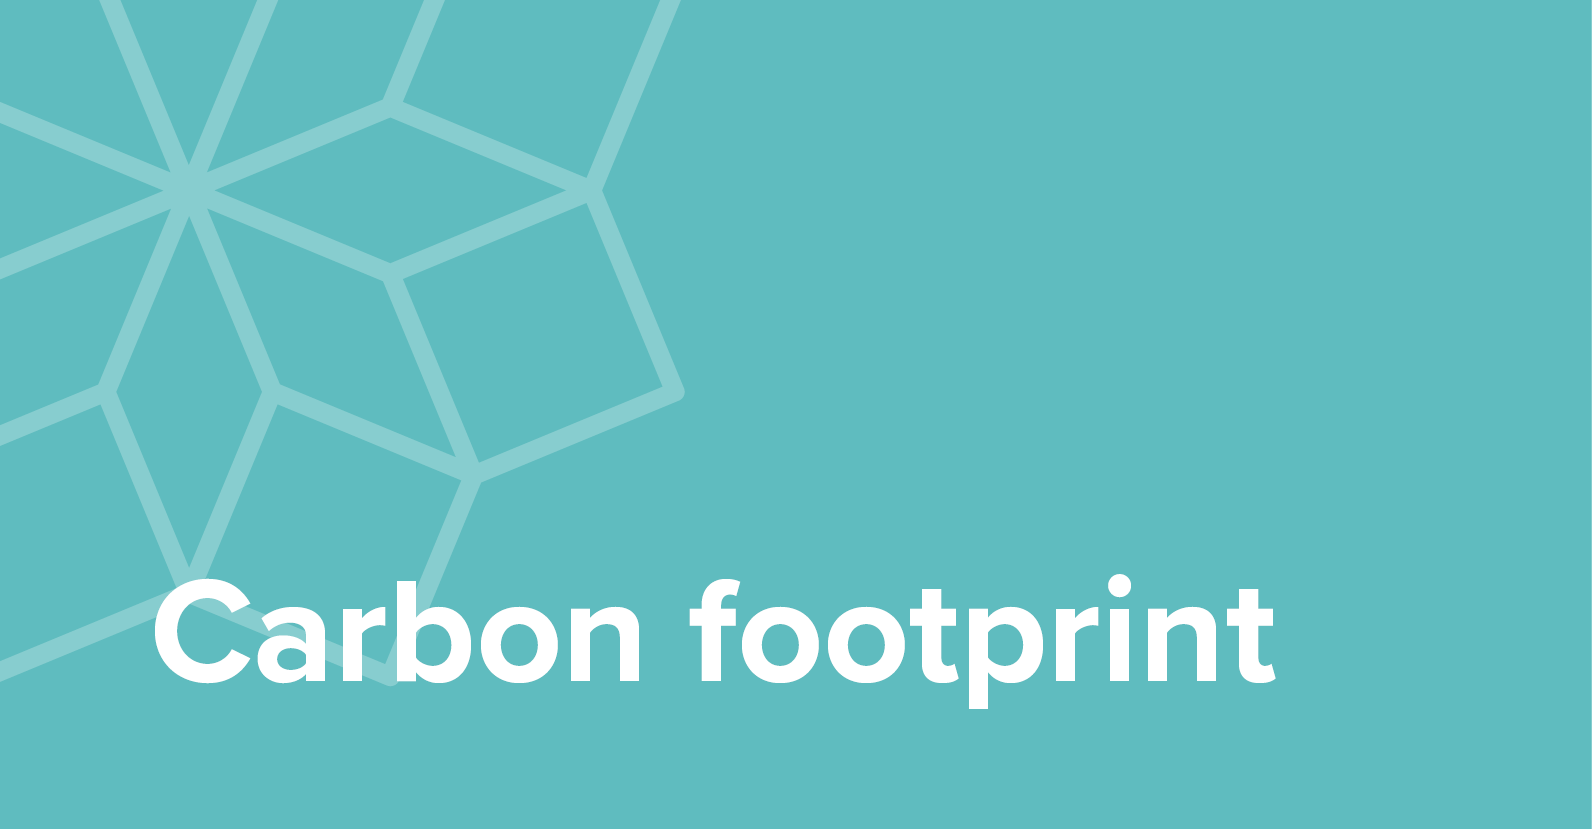 Carbon footprints